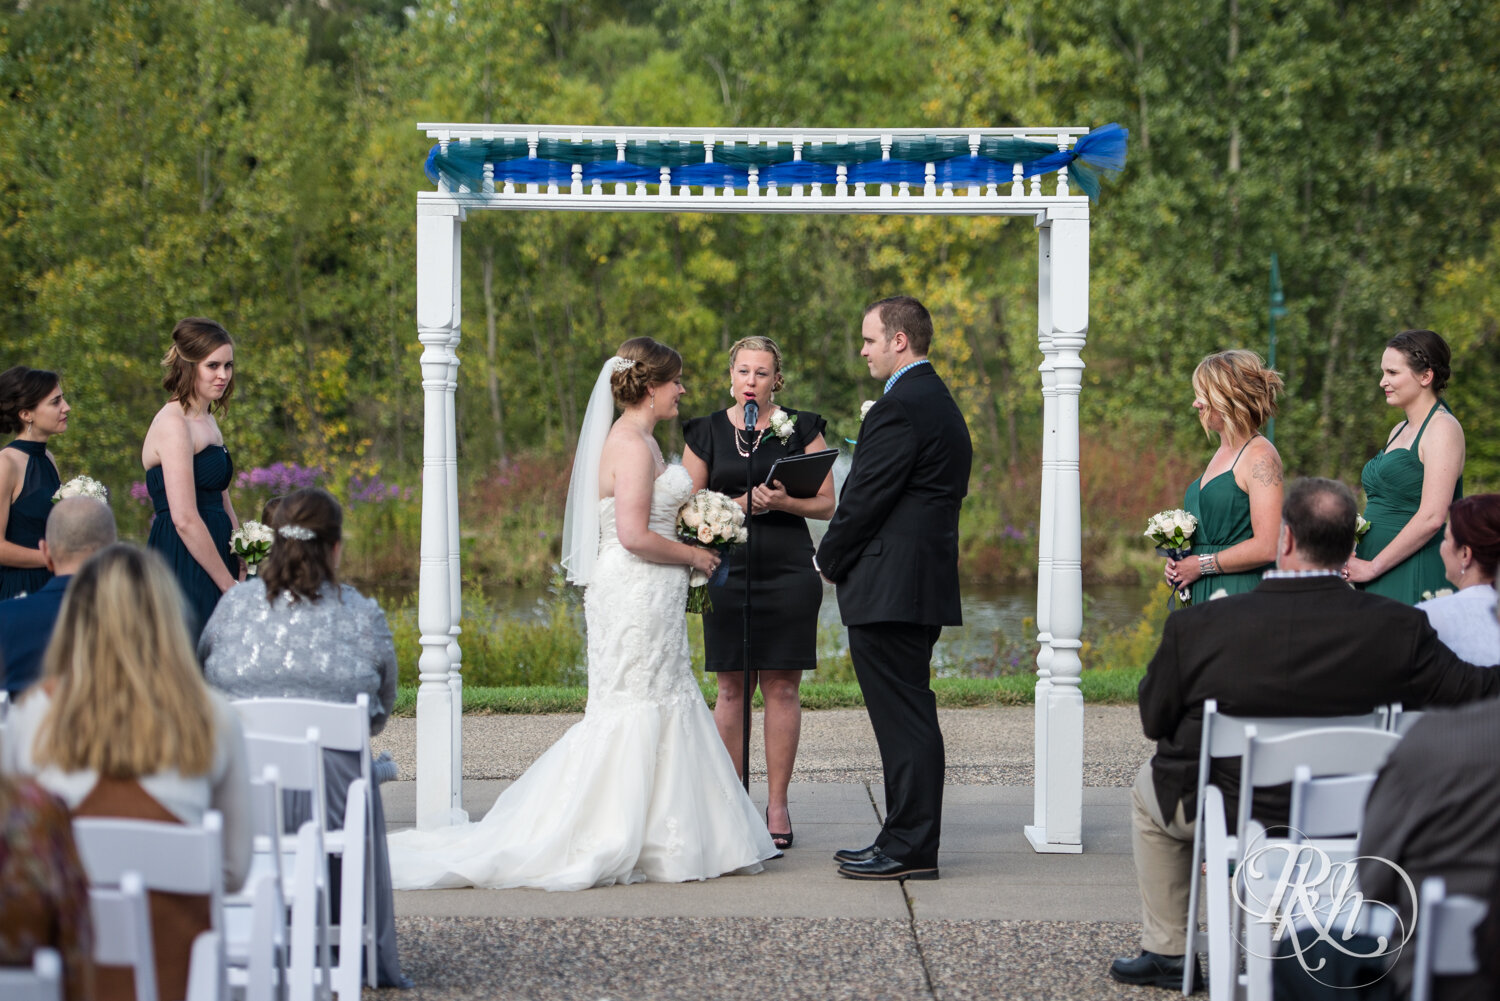 Bride and groom have outdoor ceremony at Eagan Community Center in Eagan, Minnesota.